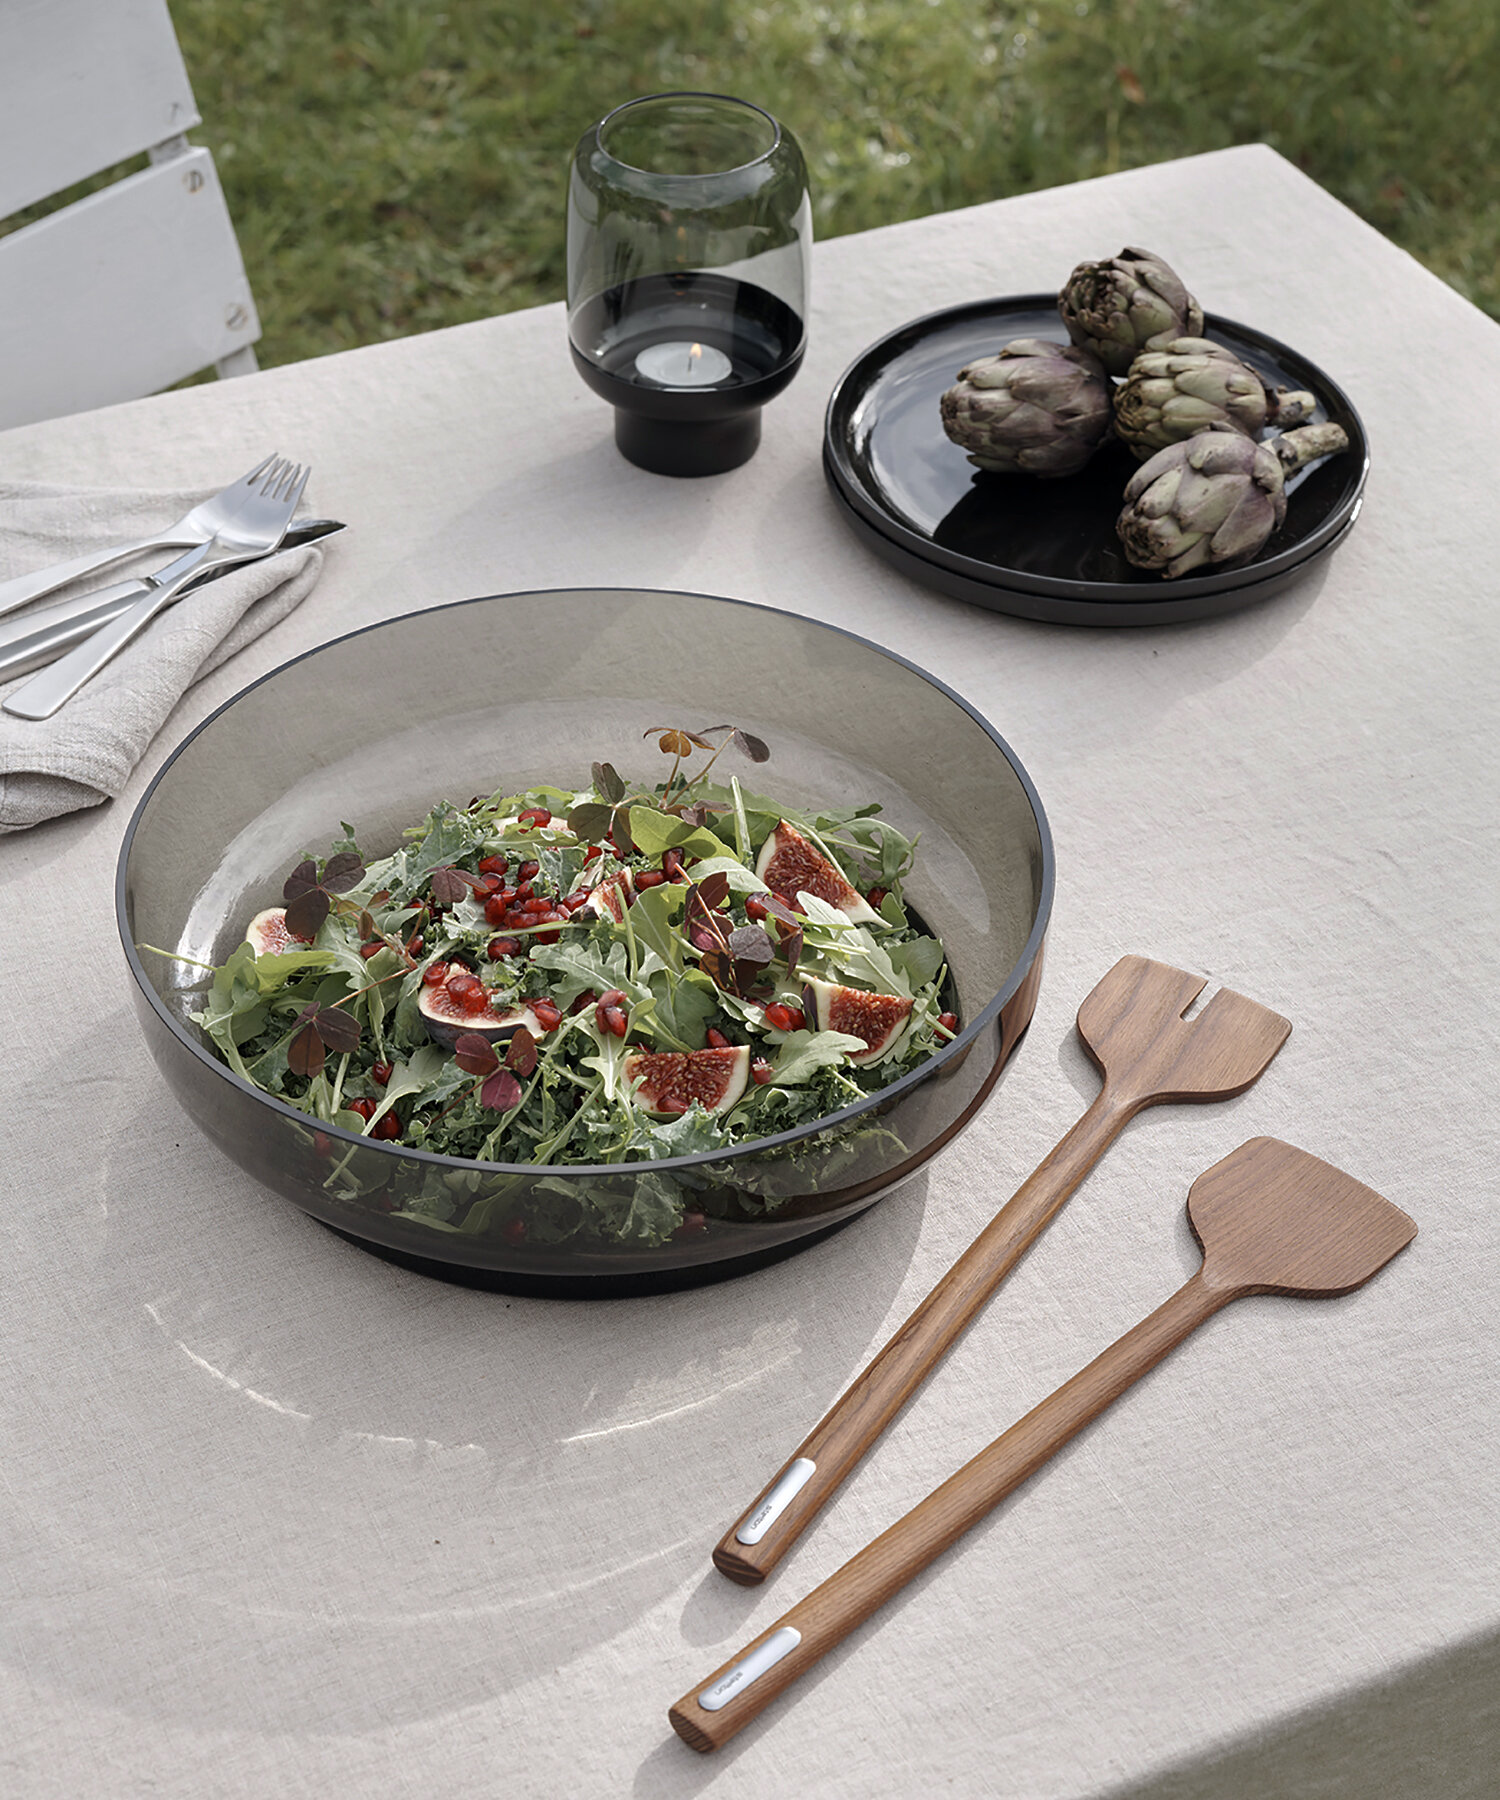 Restaurant-inspired gourmet salad bowl kits, 2019-10-18